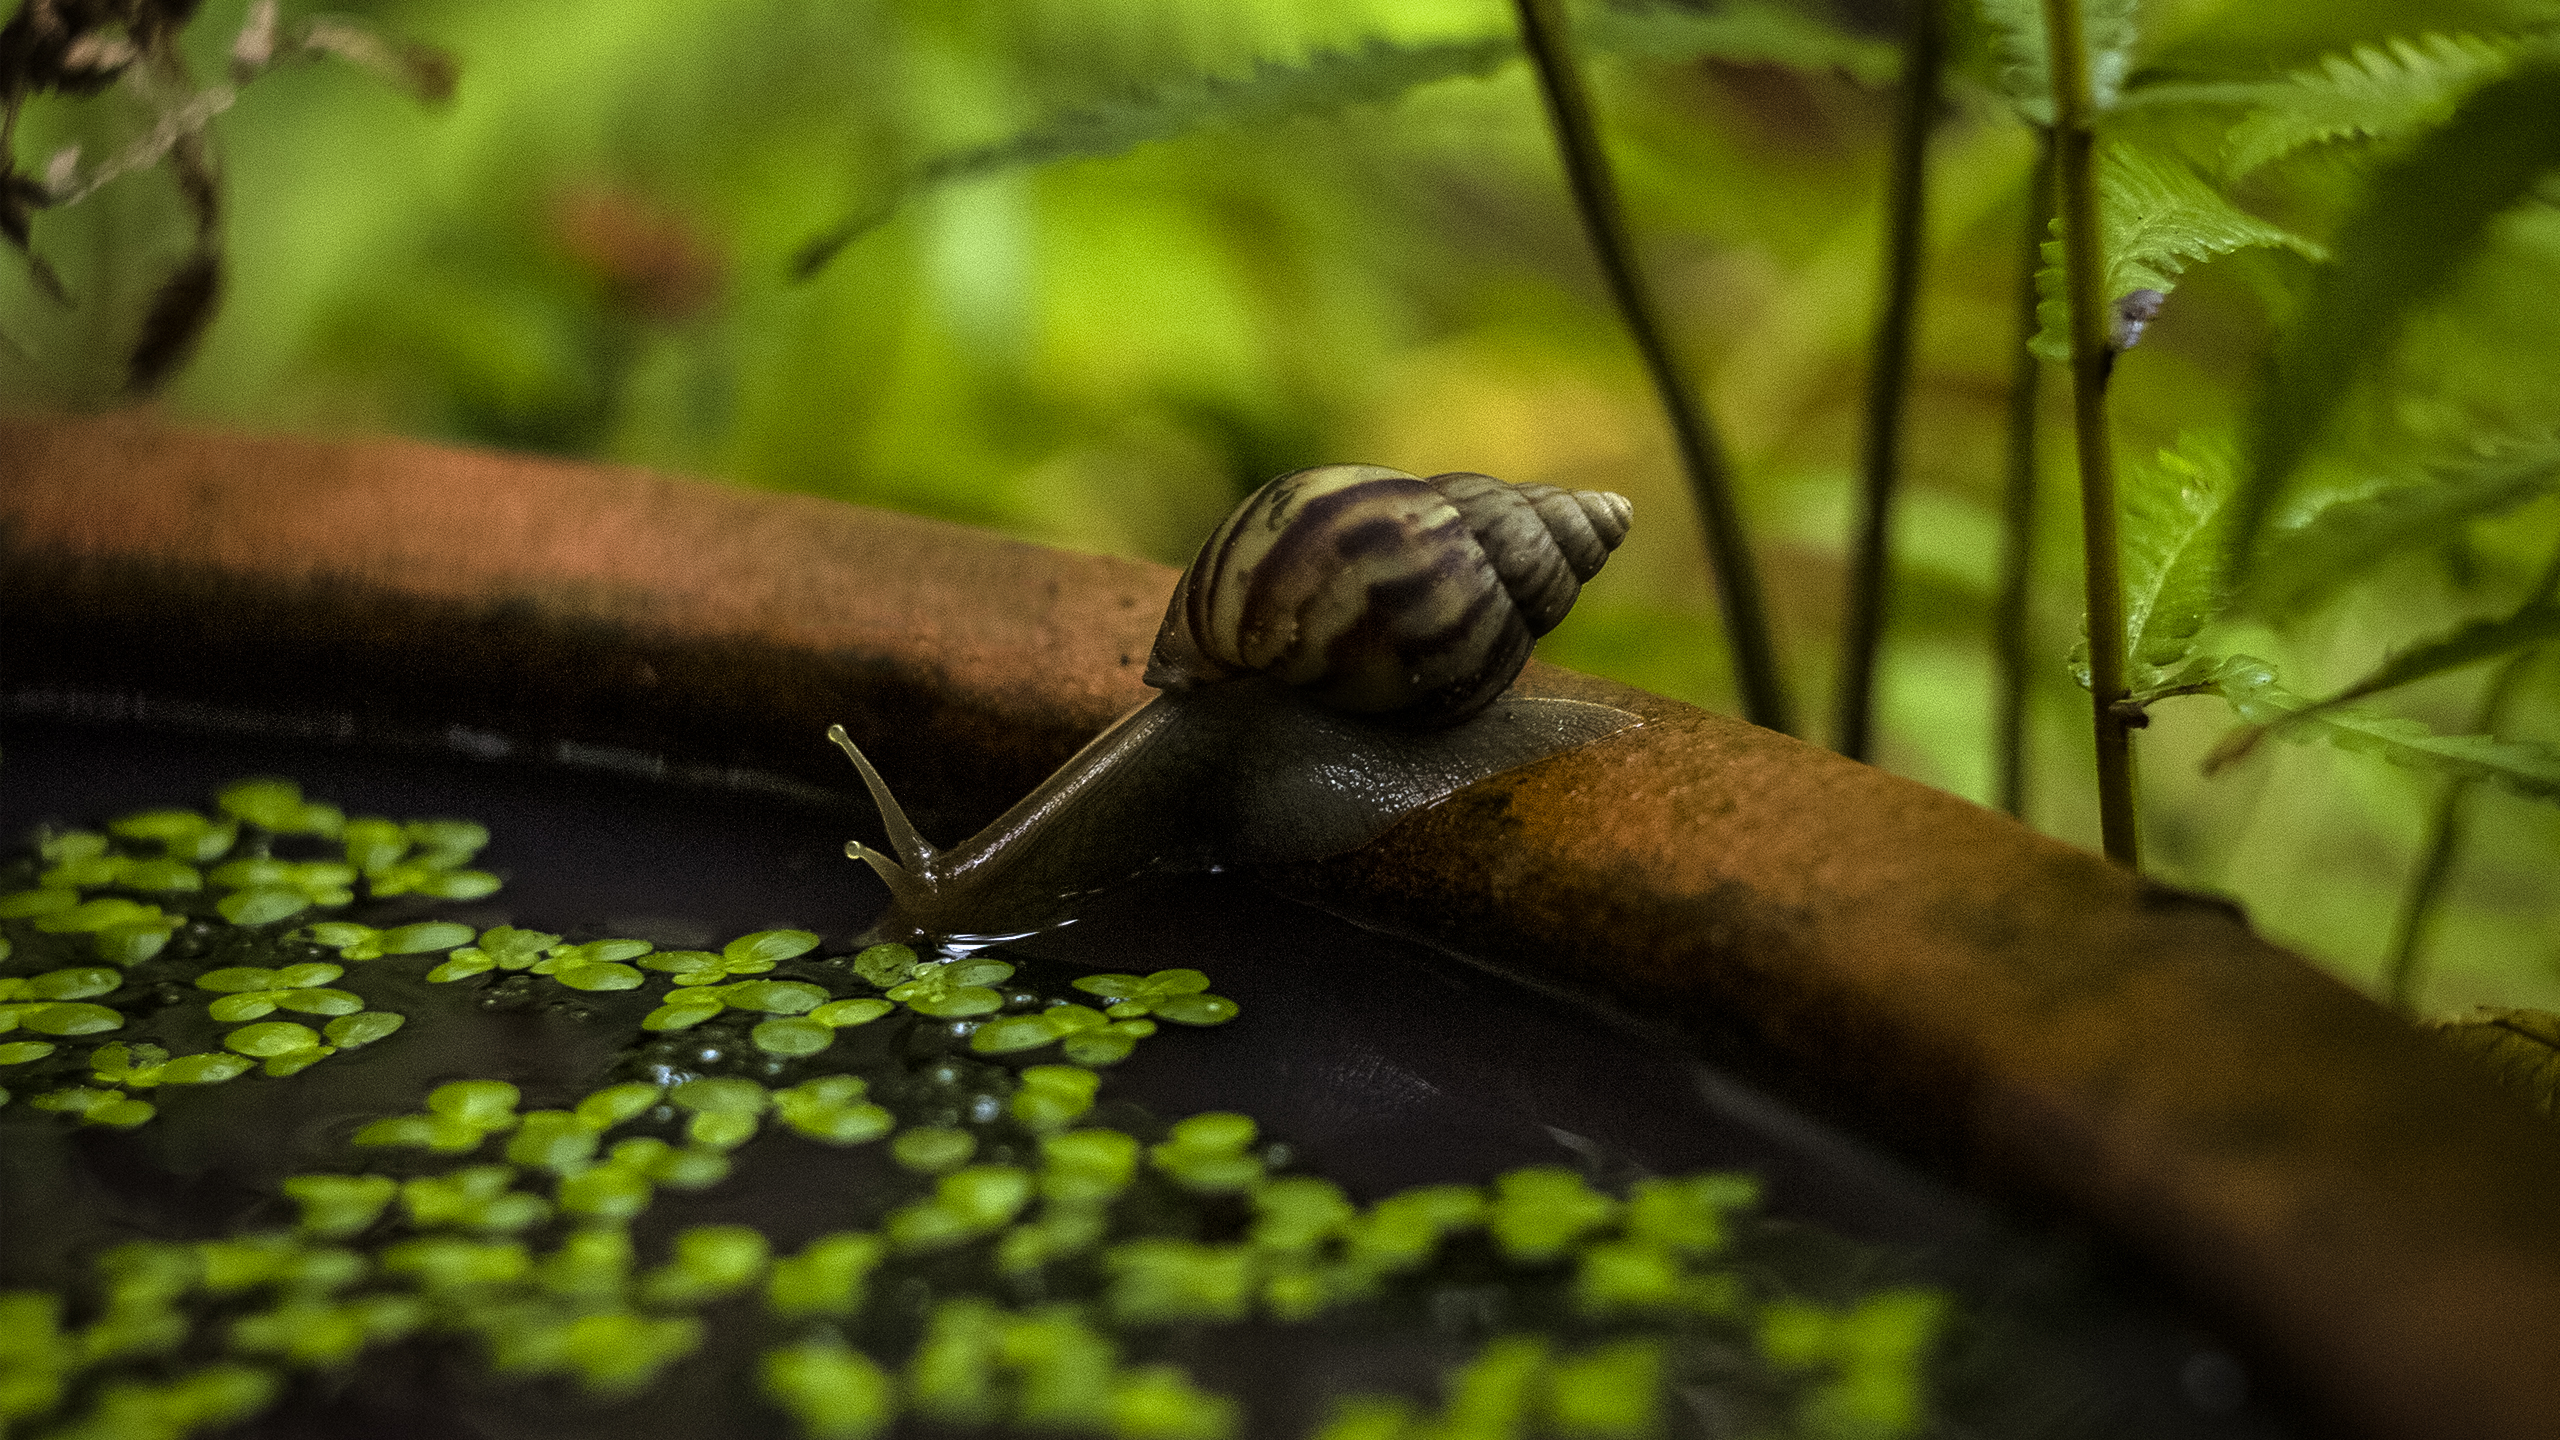 General 2560x1440 snail animals water closeup blurred nature